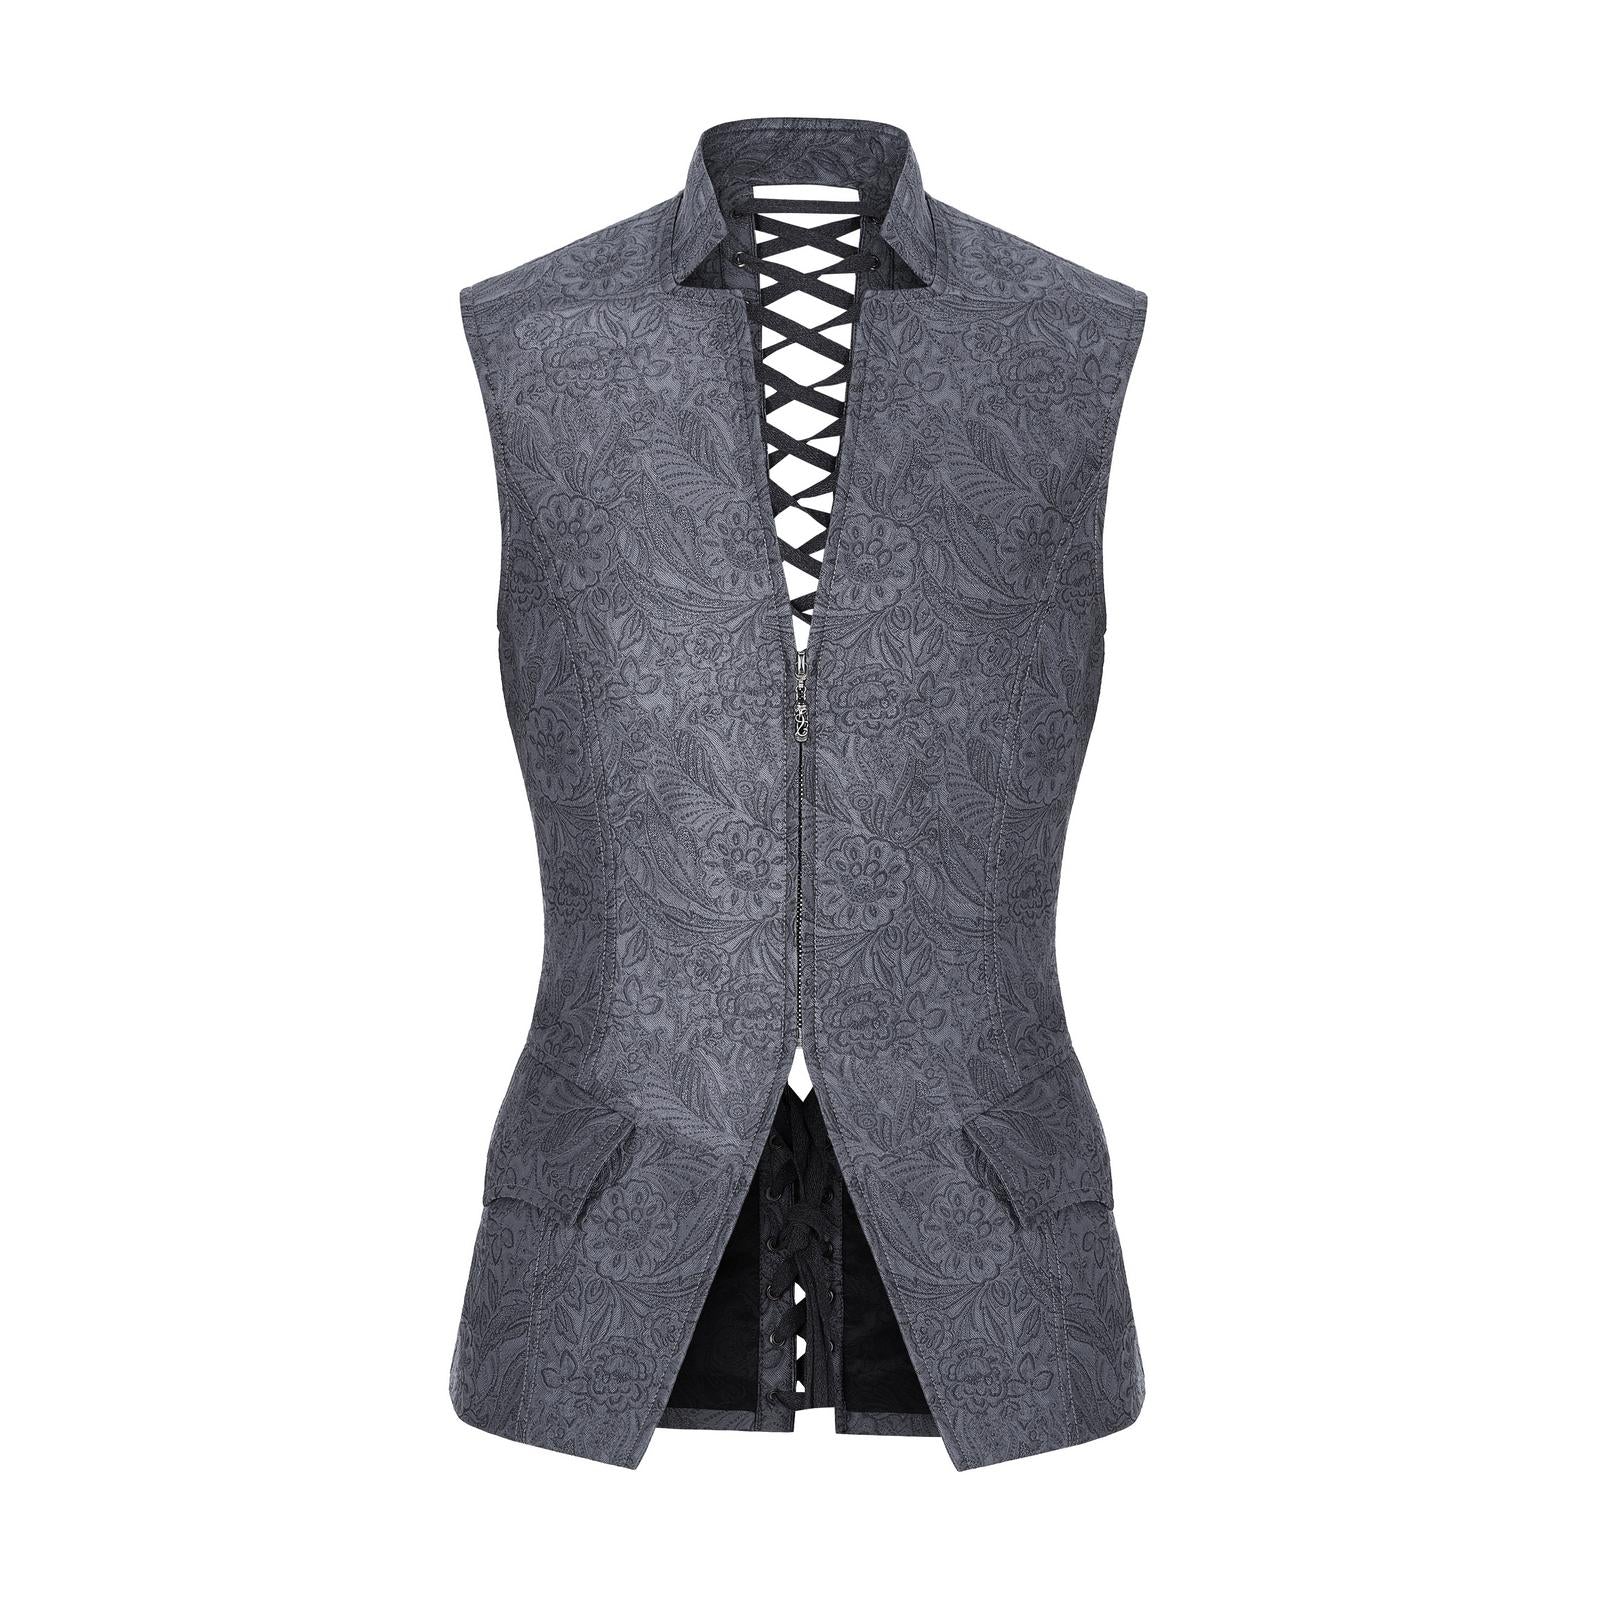 SiaLinda for Men: Waistcoat Kristan, jacquard grey, rococo style